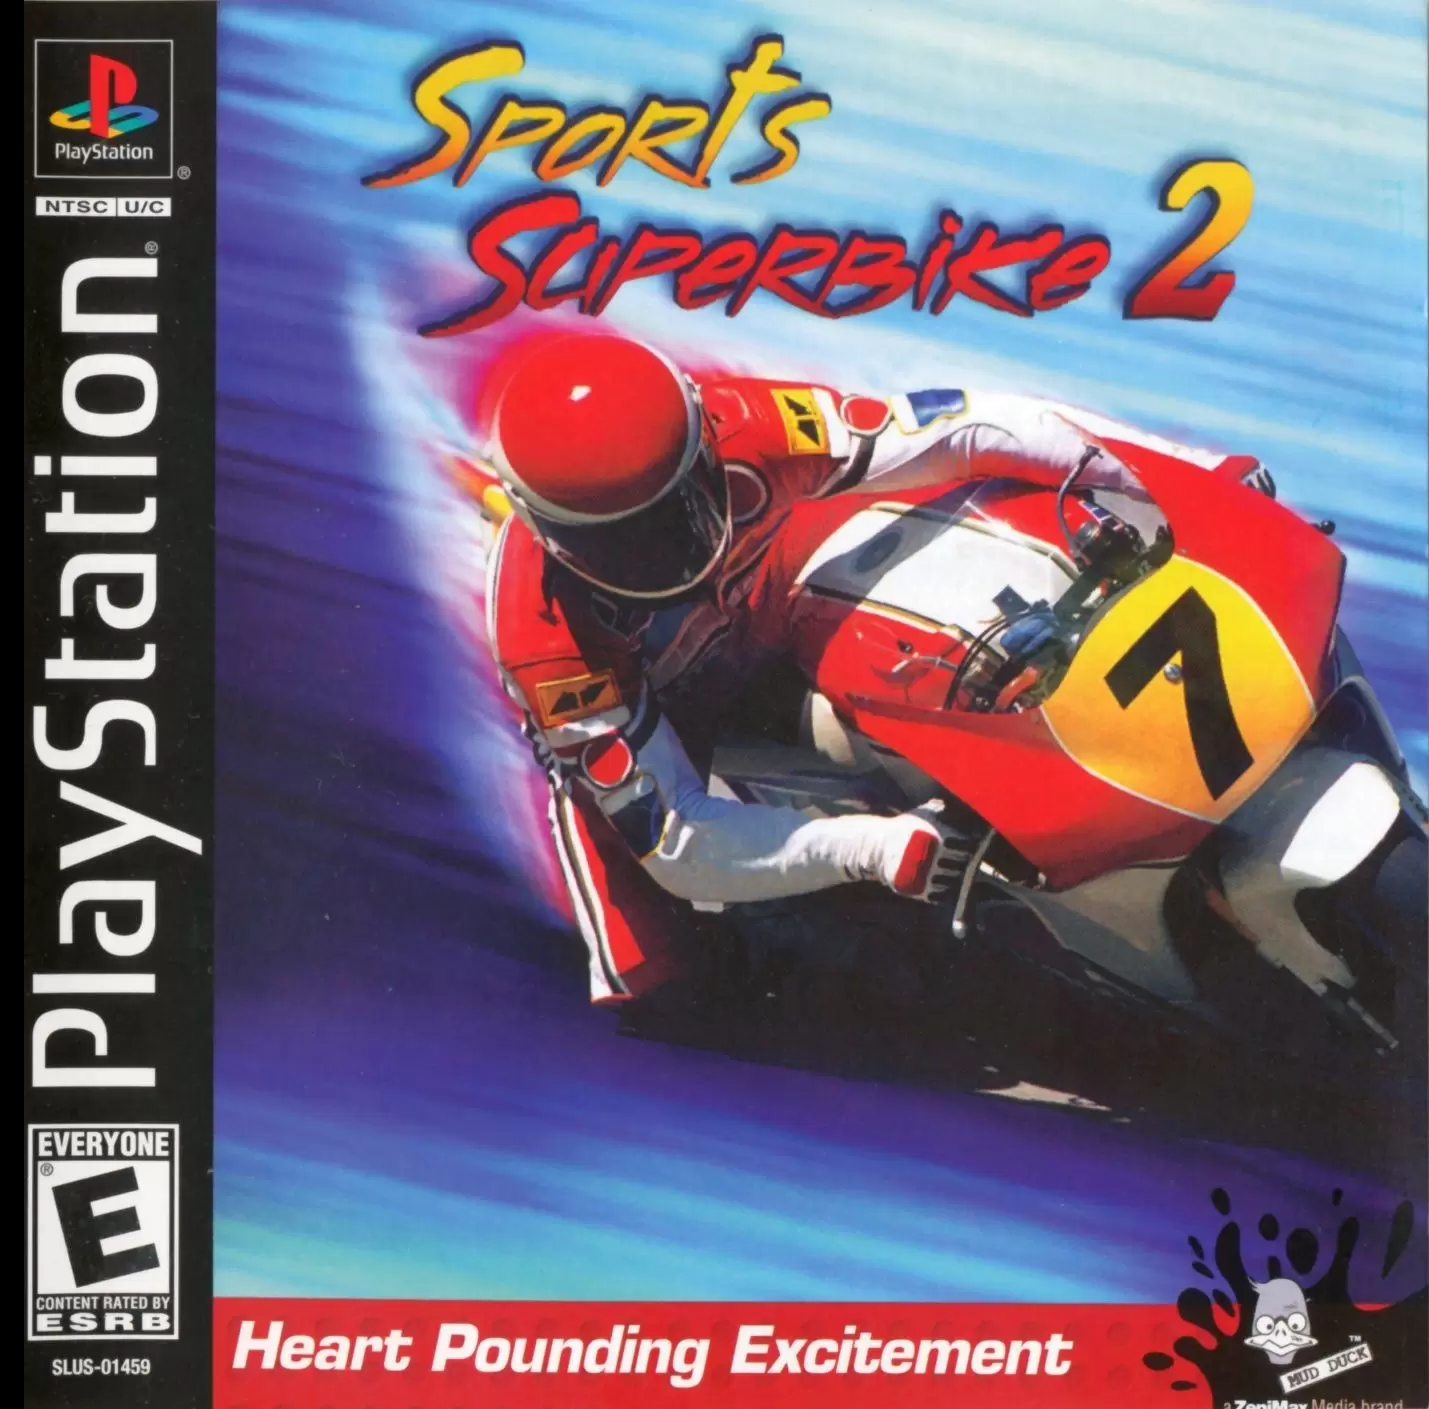 Playstation games - Sports Superbike 2